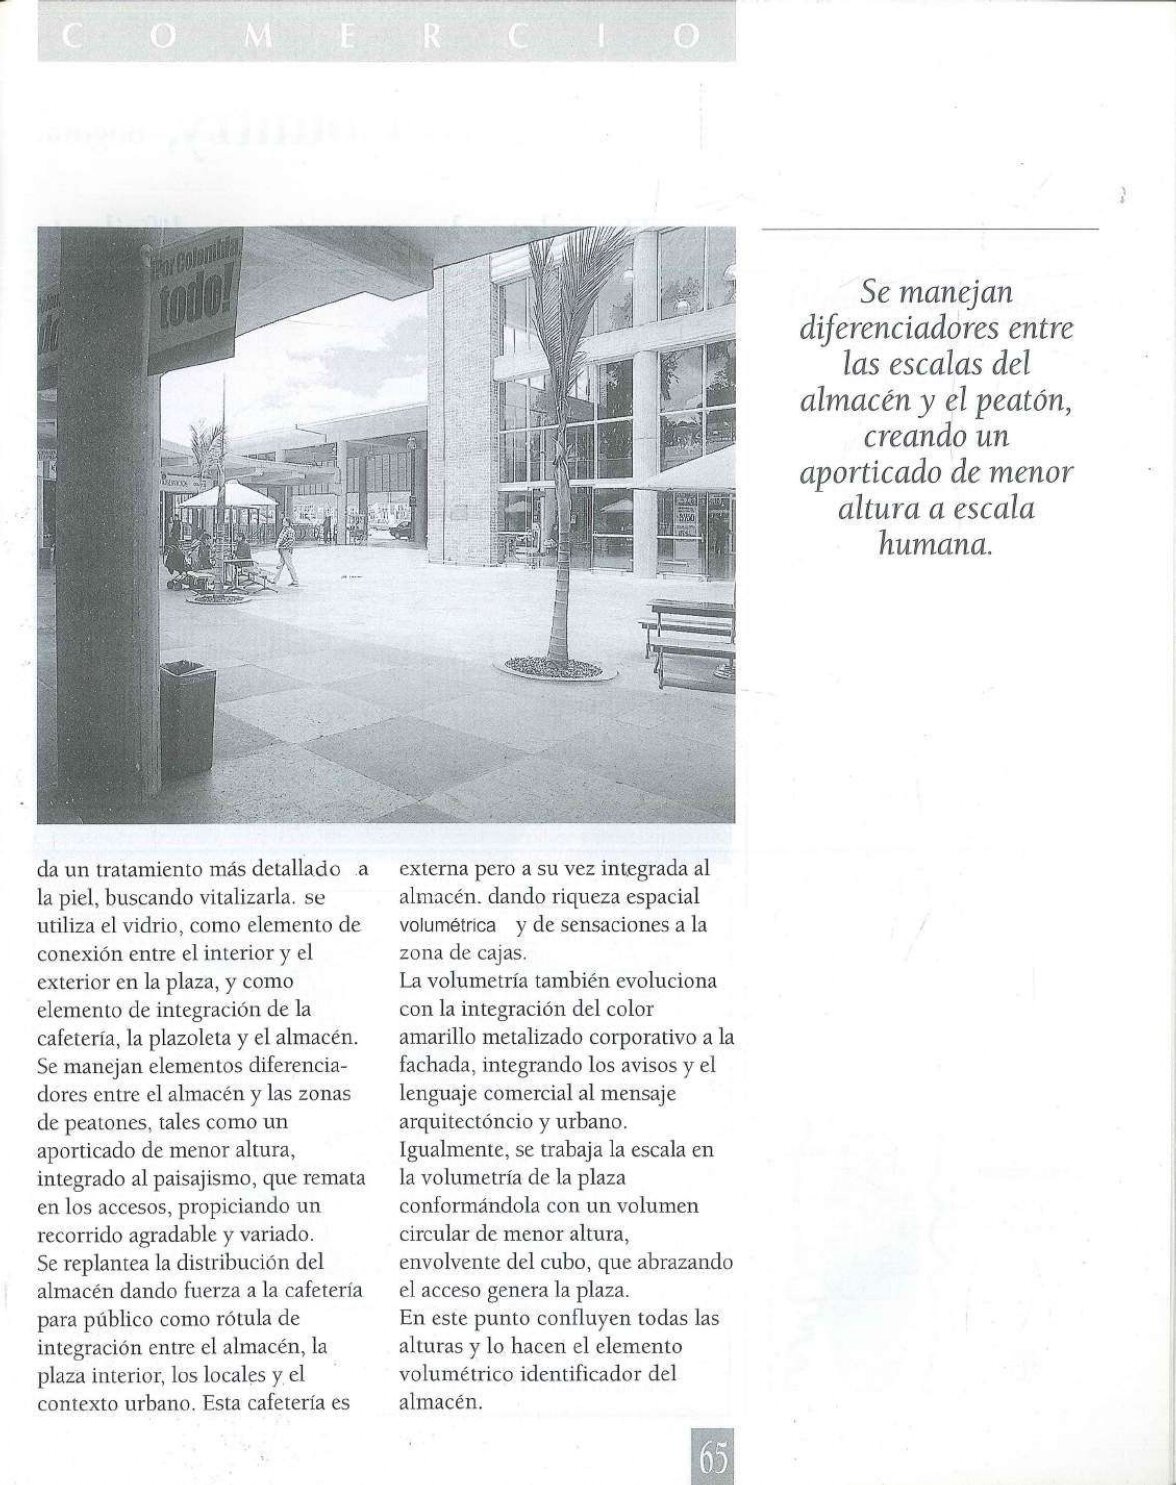 2002_Contexto Urbano- Obra reciente 1995-2002. REVISTA PROA 1_compressed (1)_page-0067.jpg